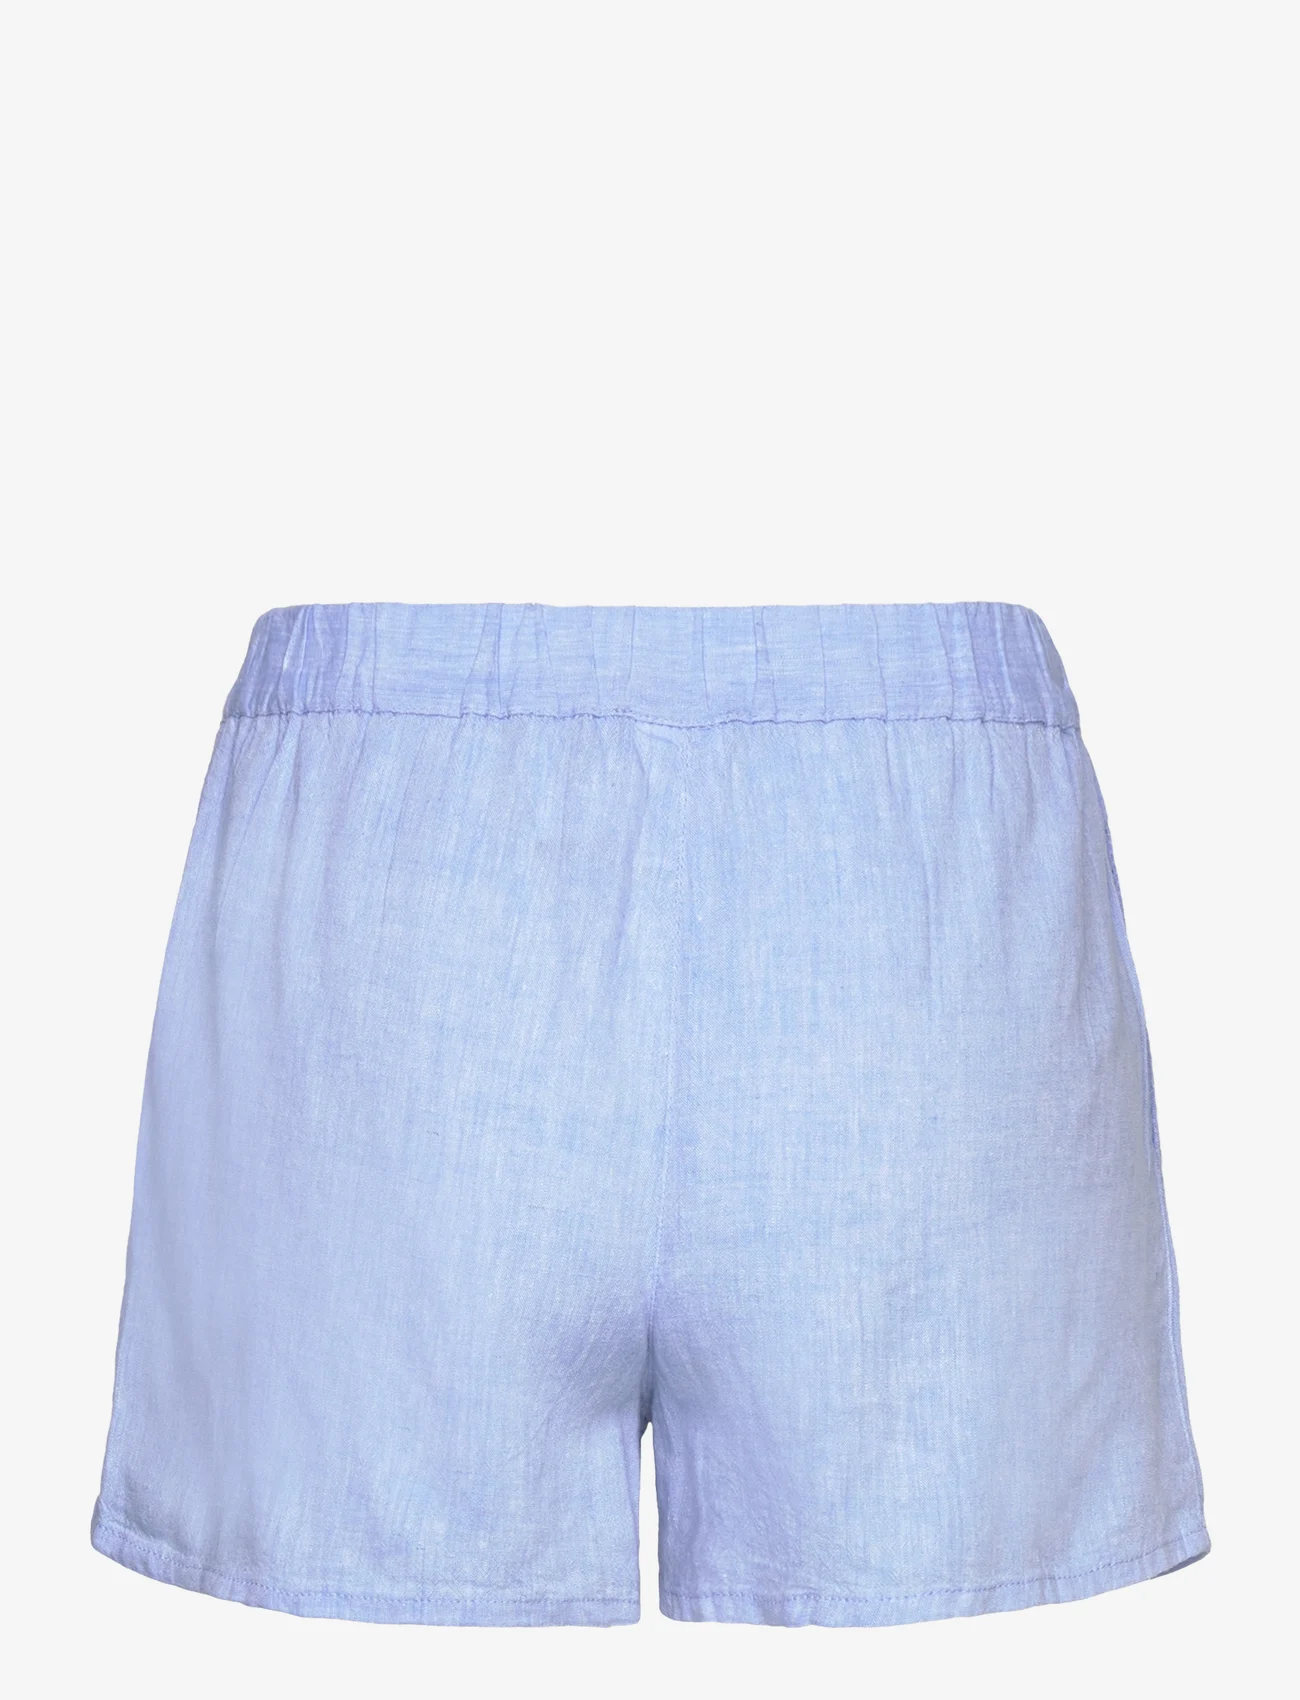 Etam - Justine - Short pyjama bottom - laveste priser - sky blue - 1